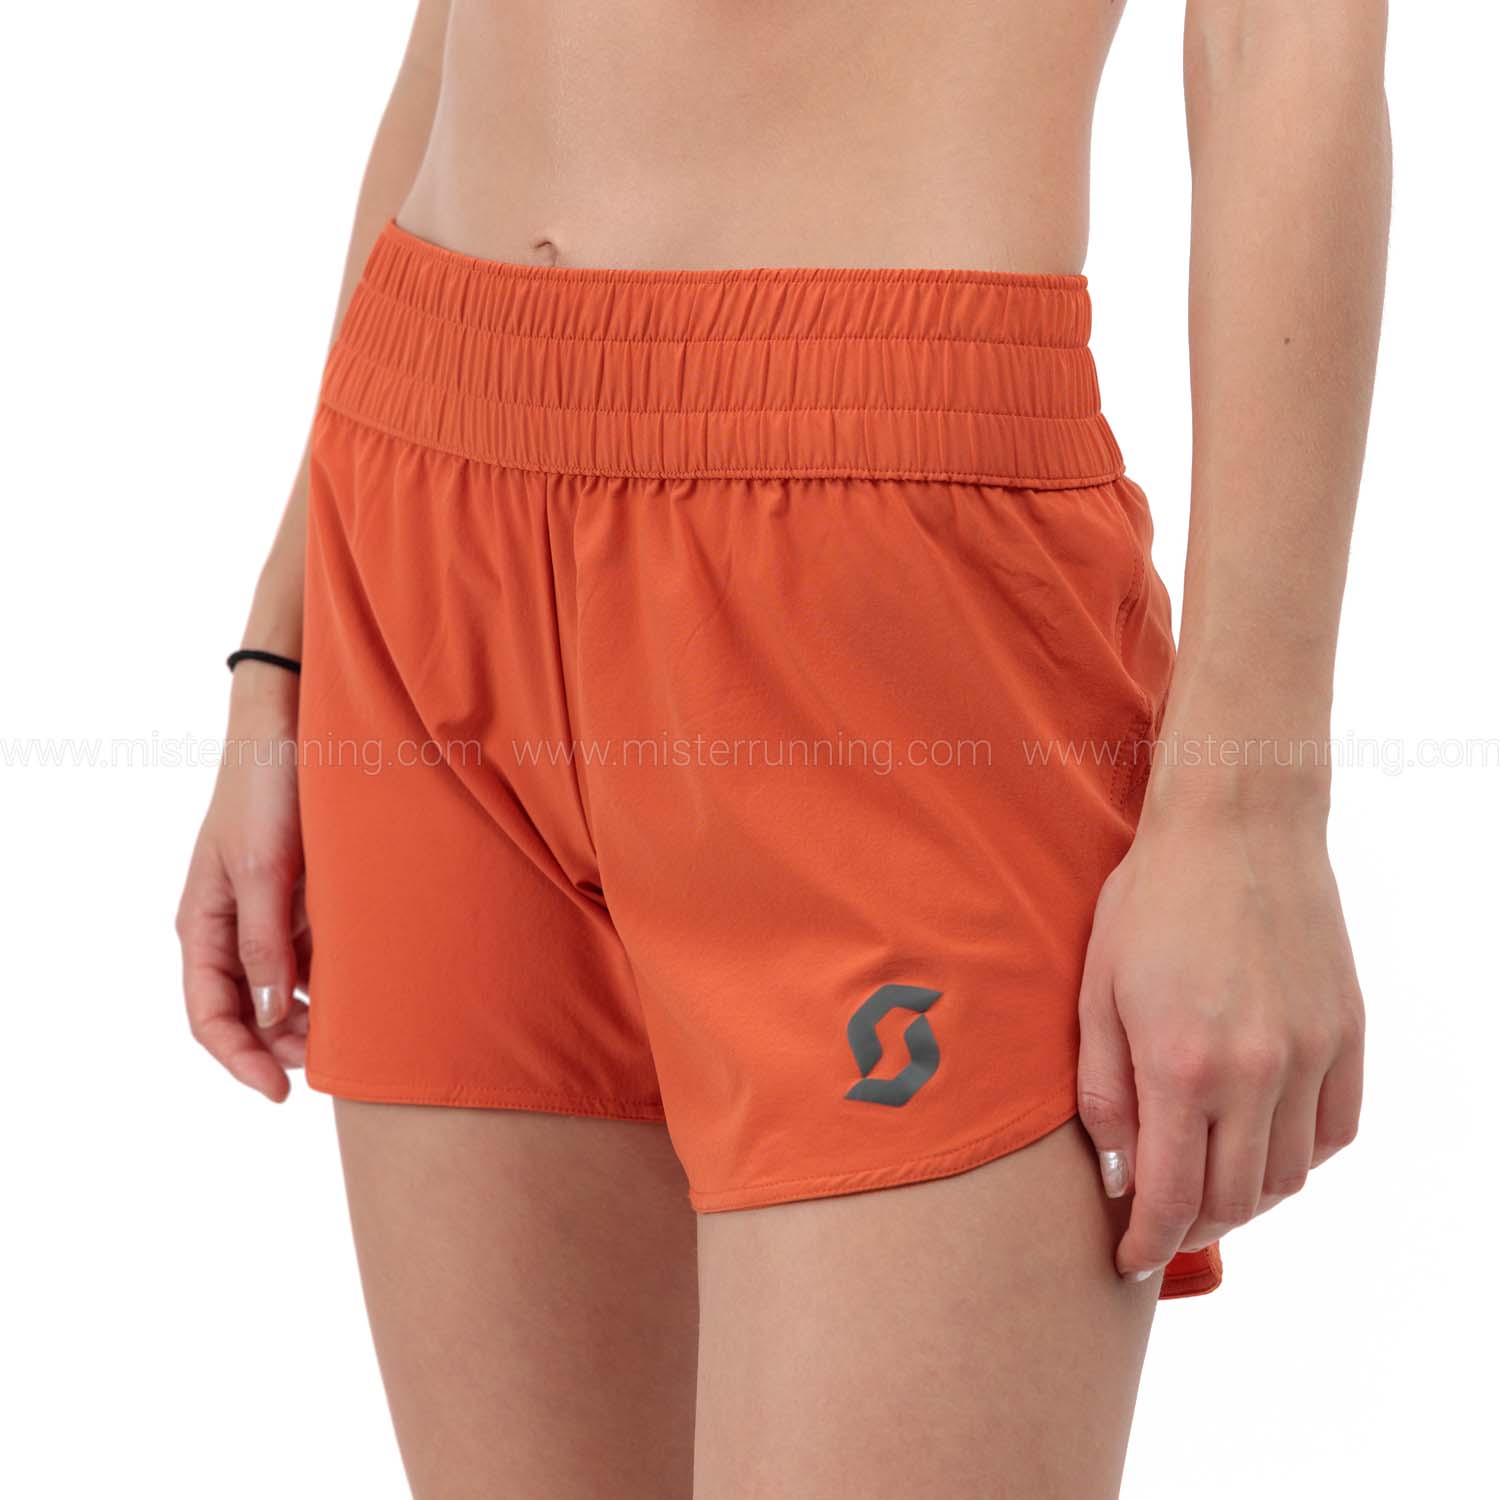 Scott Endurance 5in Shorts - Braze Orange